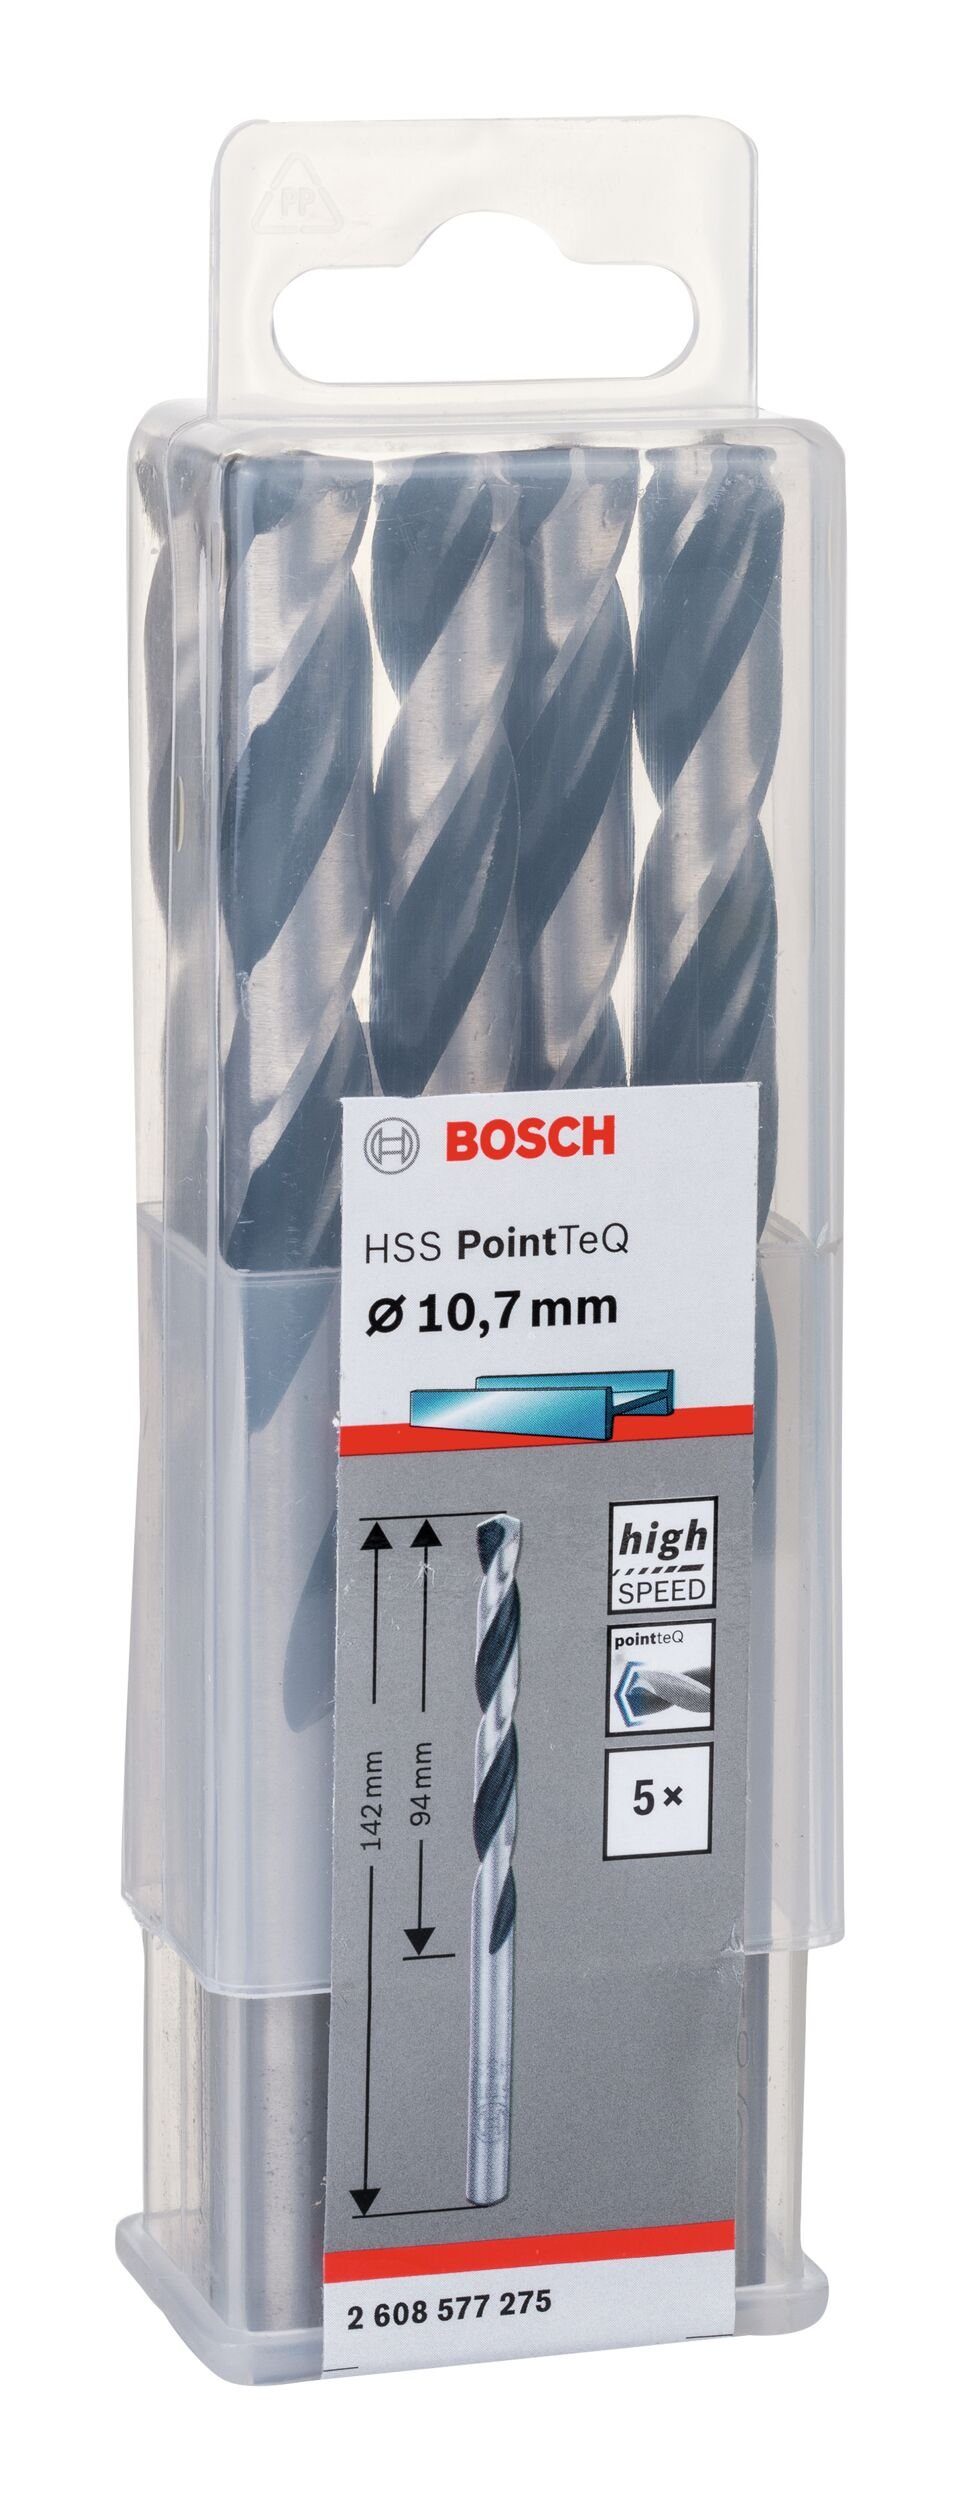 Metallbohrer, 5er-Pack (5 338) Stück), - PointTeQ HSS BOSCH mm - 10,7 (DIN Metallspiralbohrer